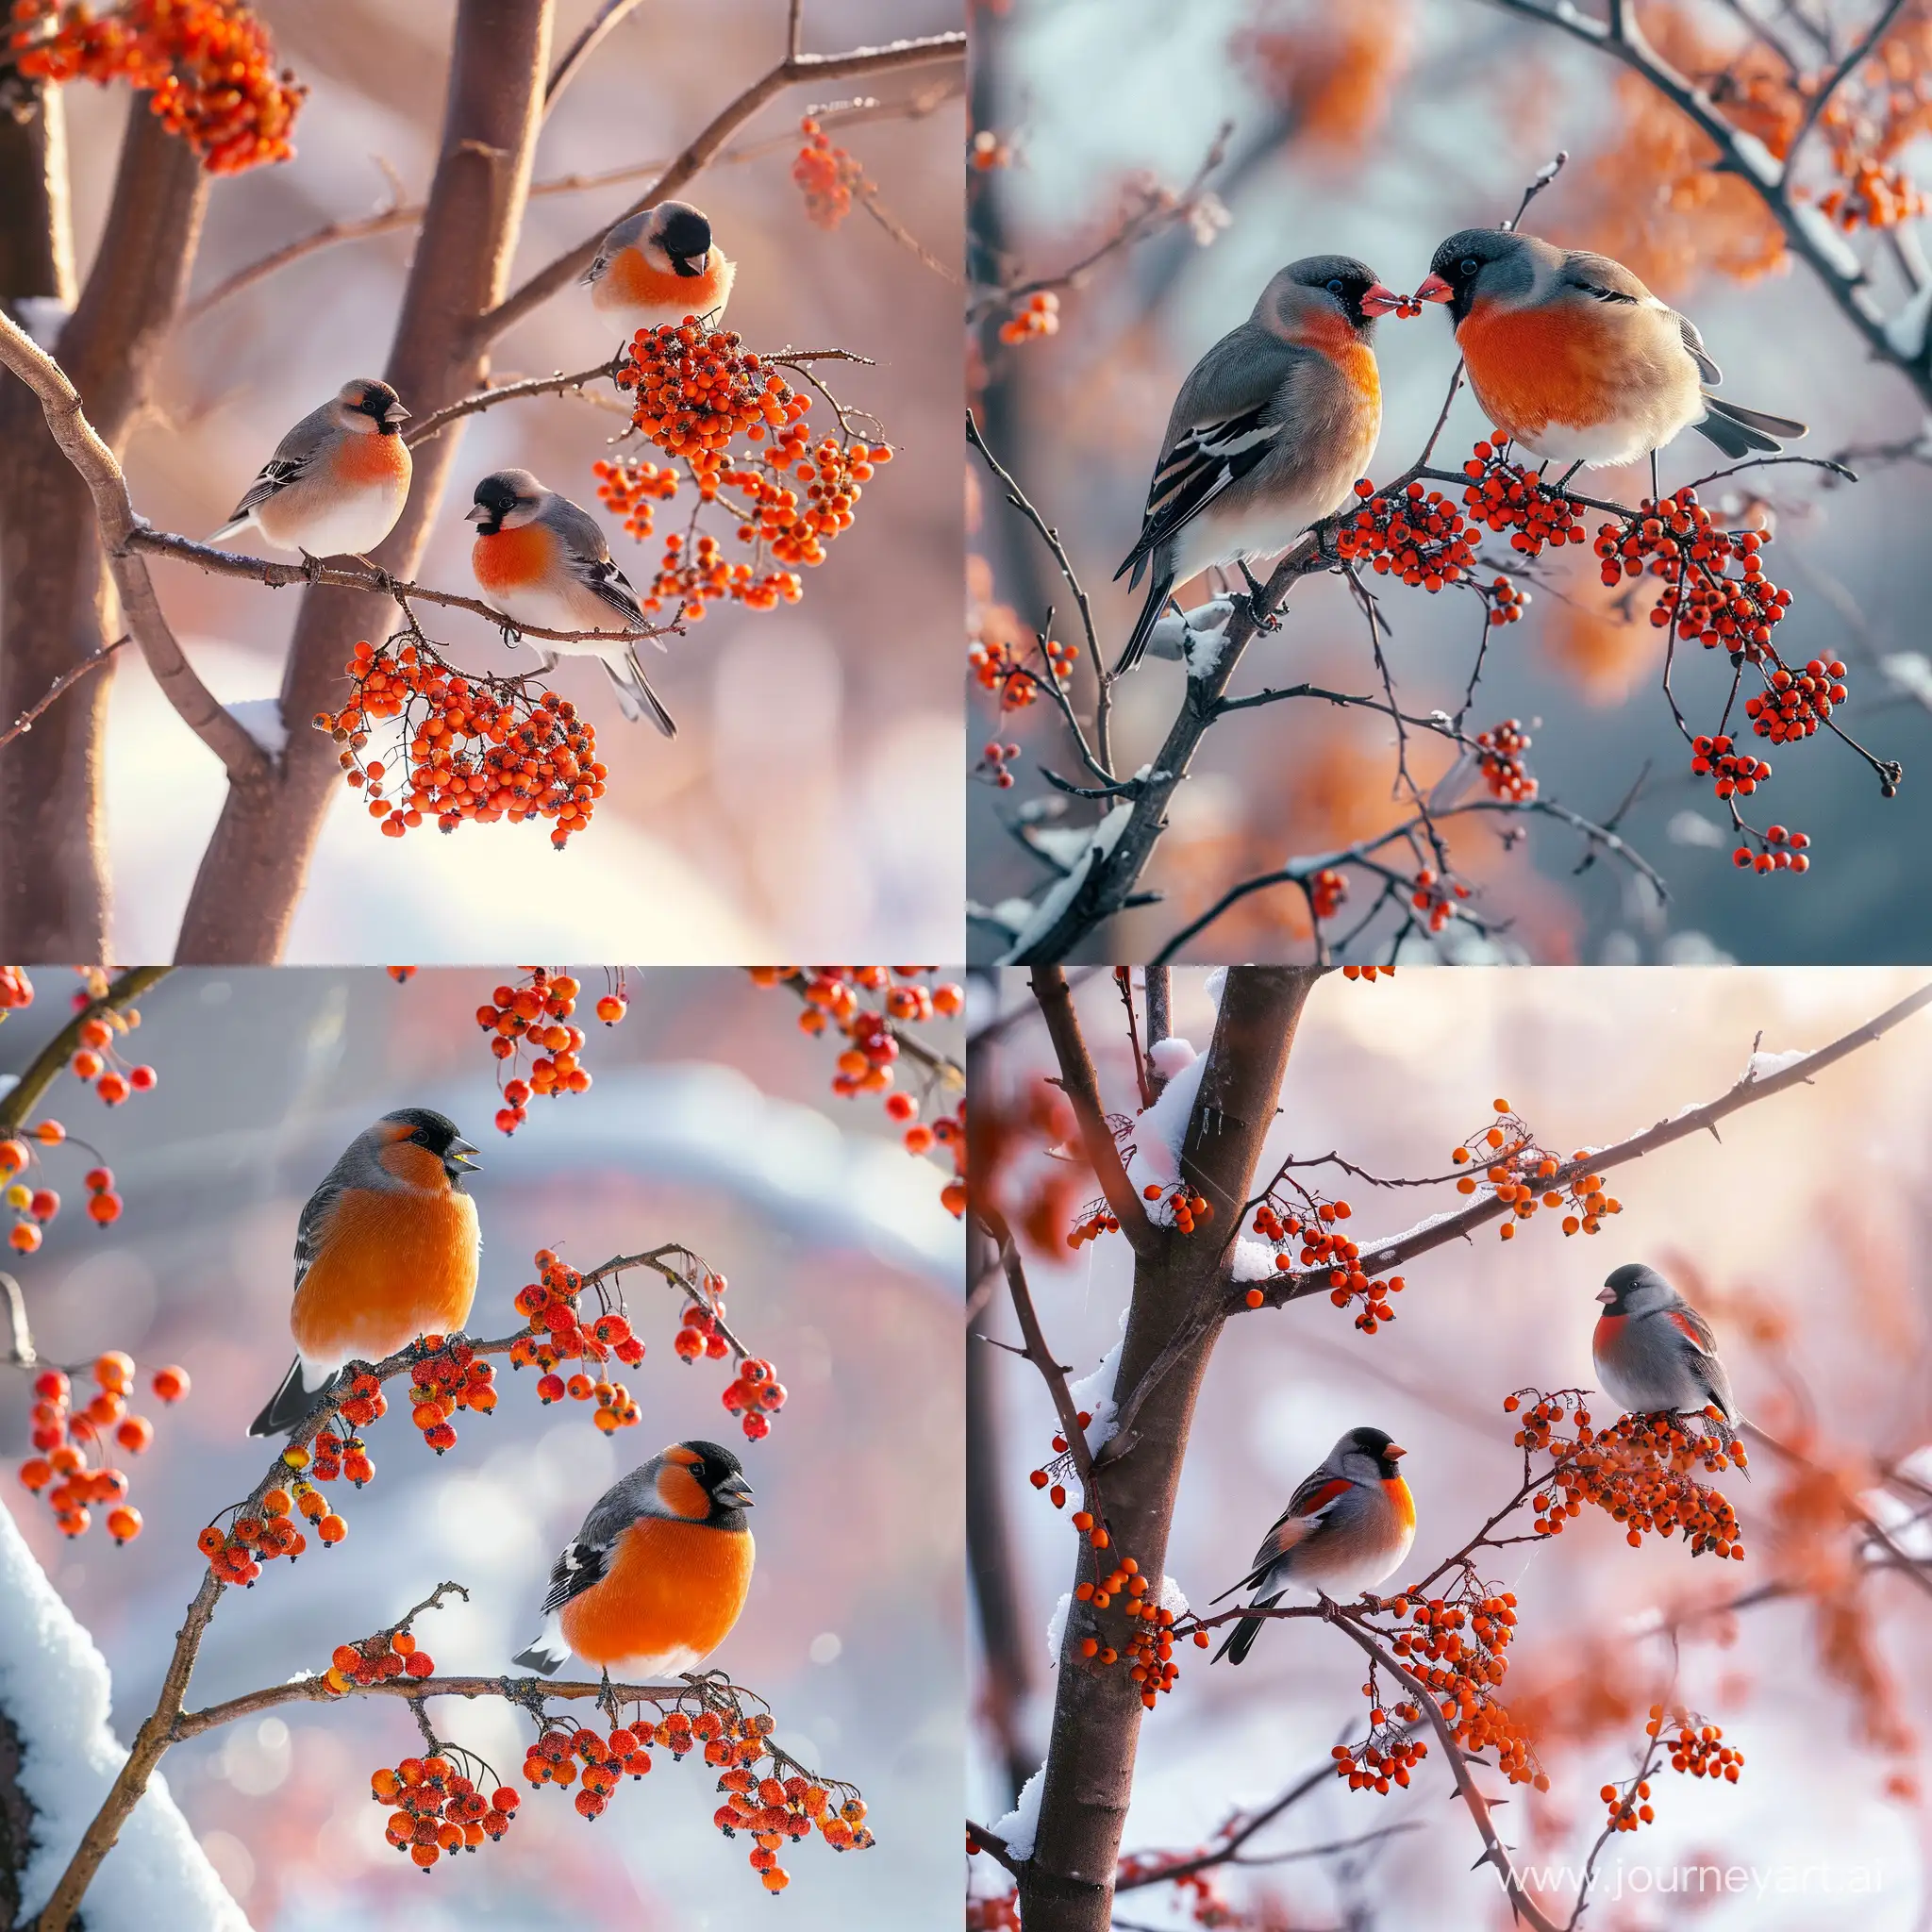 Vibrant-Bullfinches-Feeding-on-Rowan-Berries-in-Winter-Sunlight